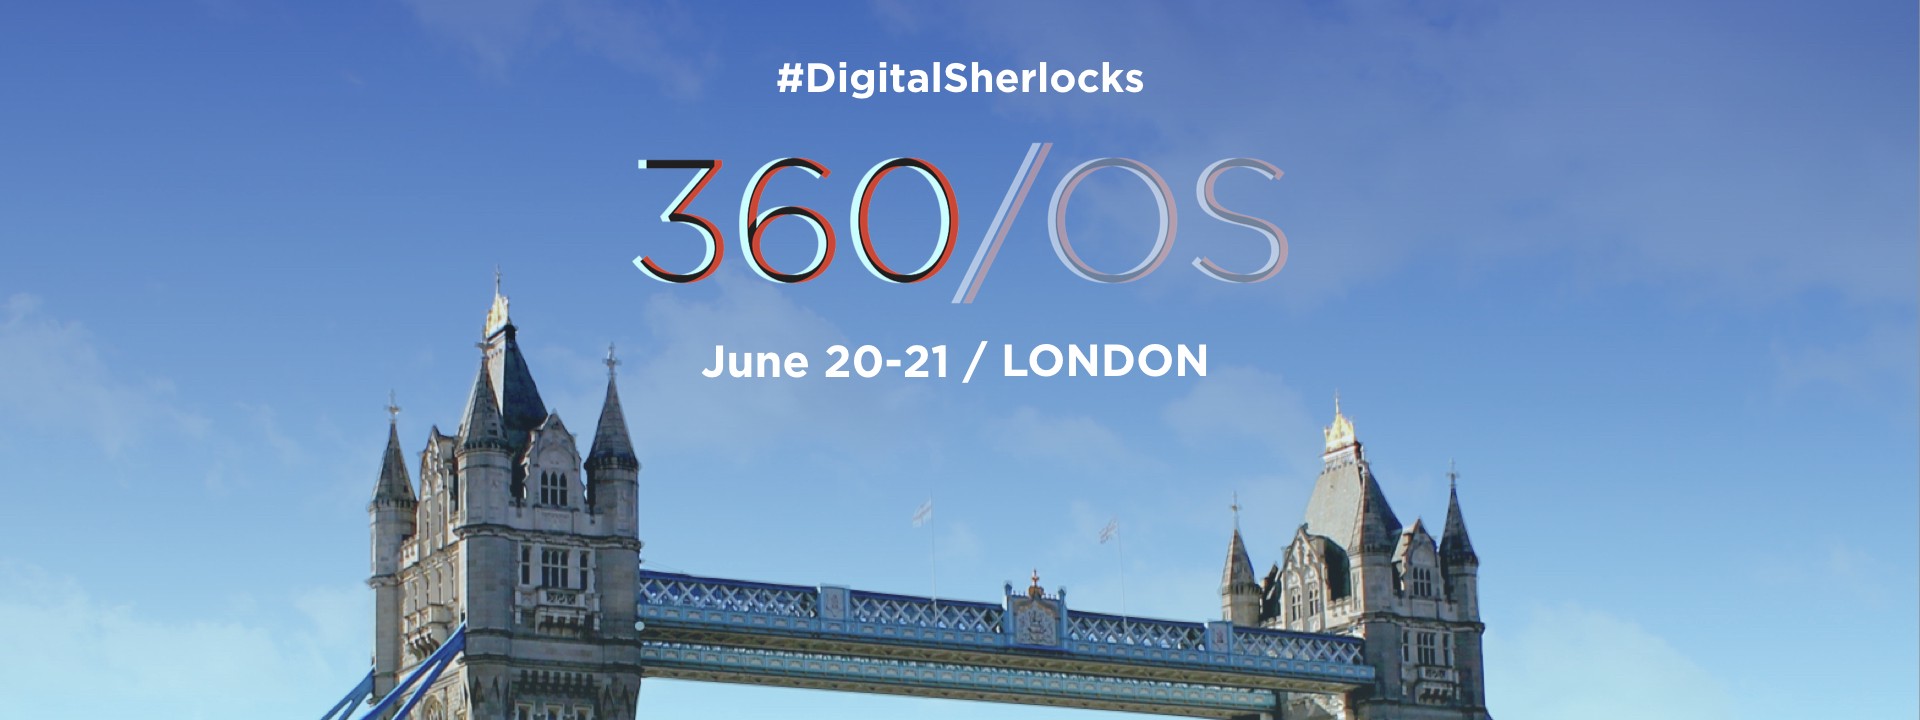 #DigitalSherlocks: See You In London